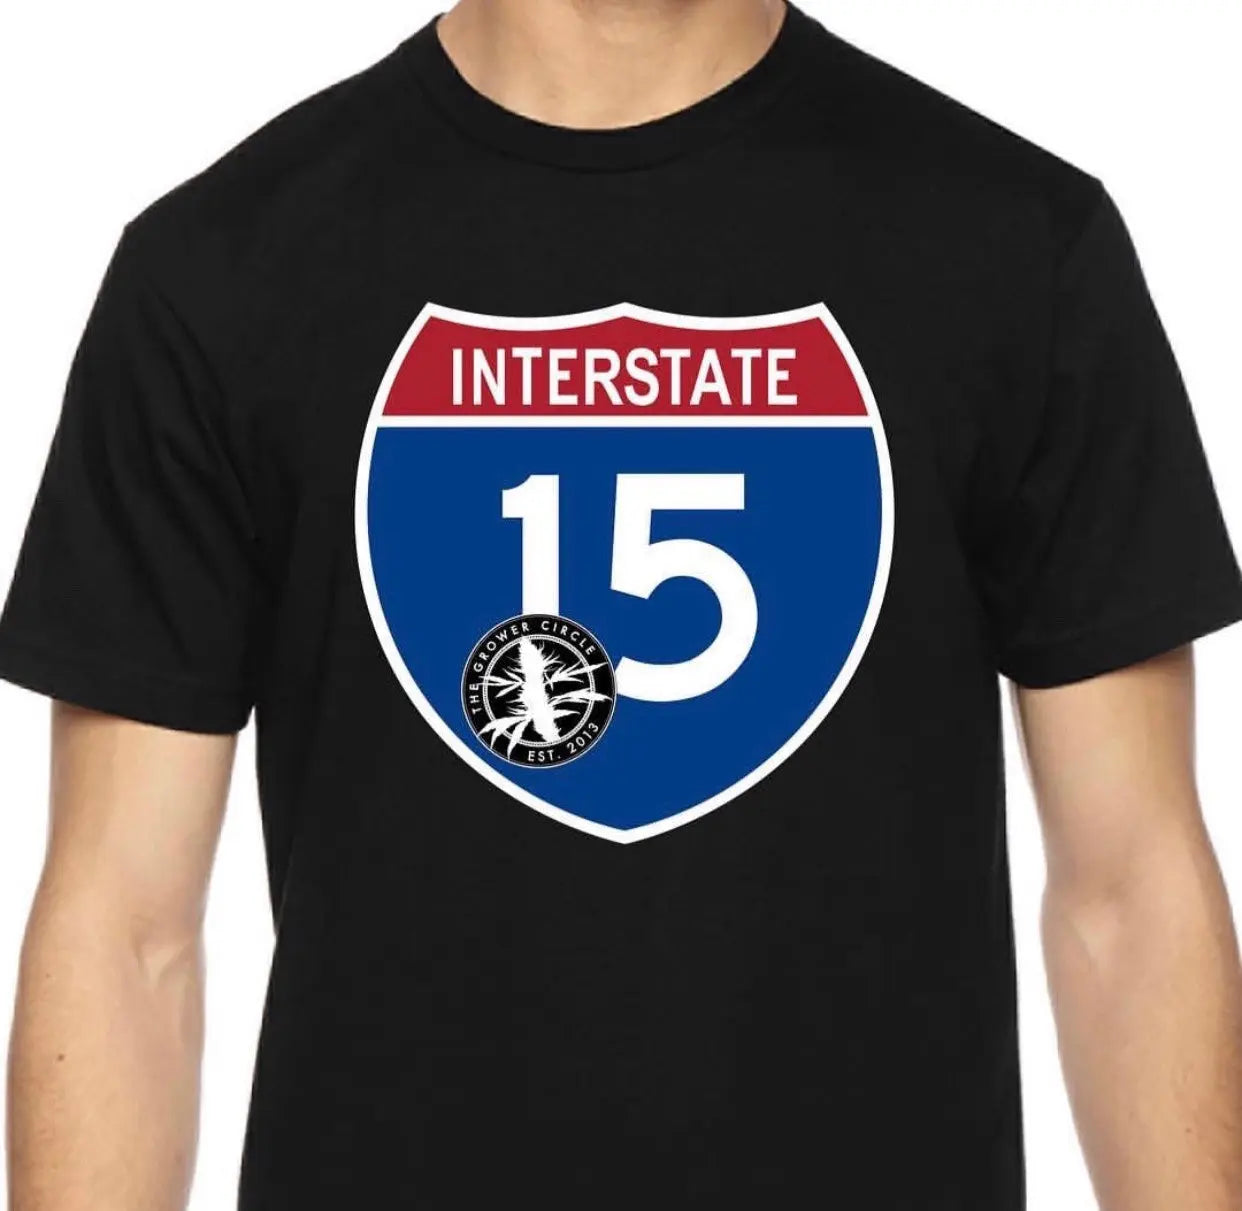 Interstate 15 T-Shirt The Grower Circle